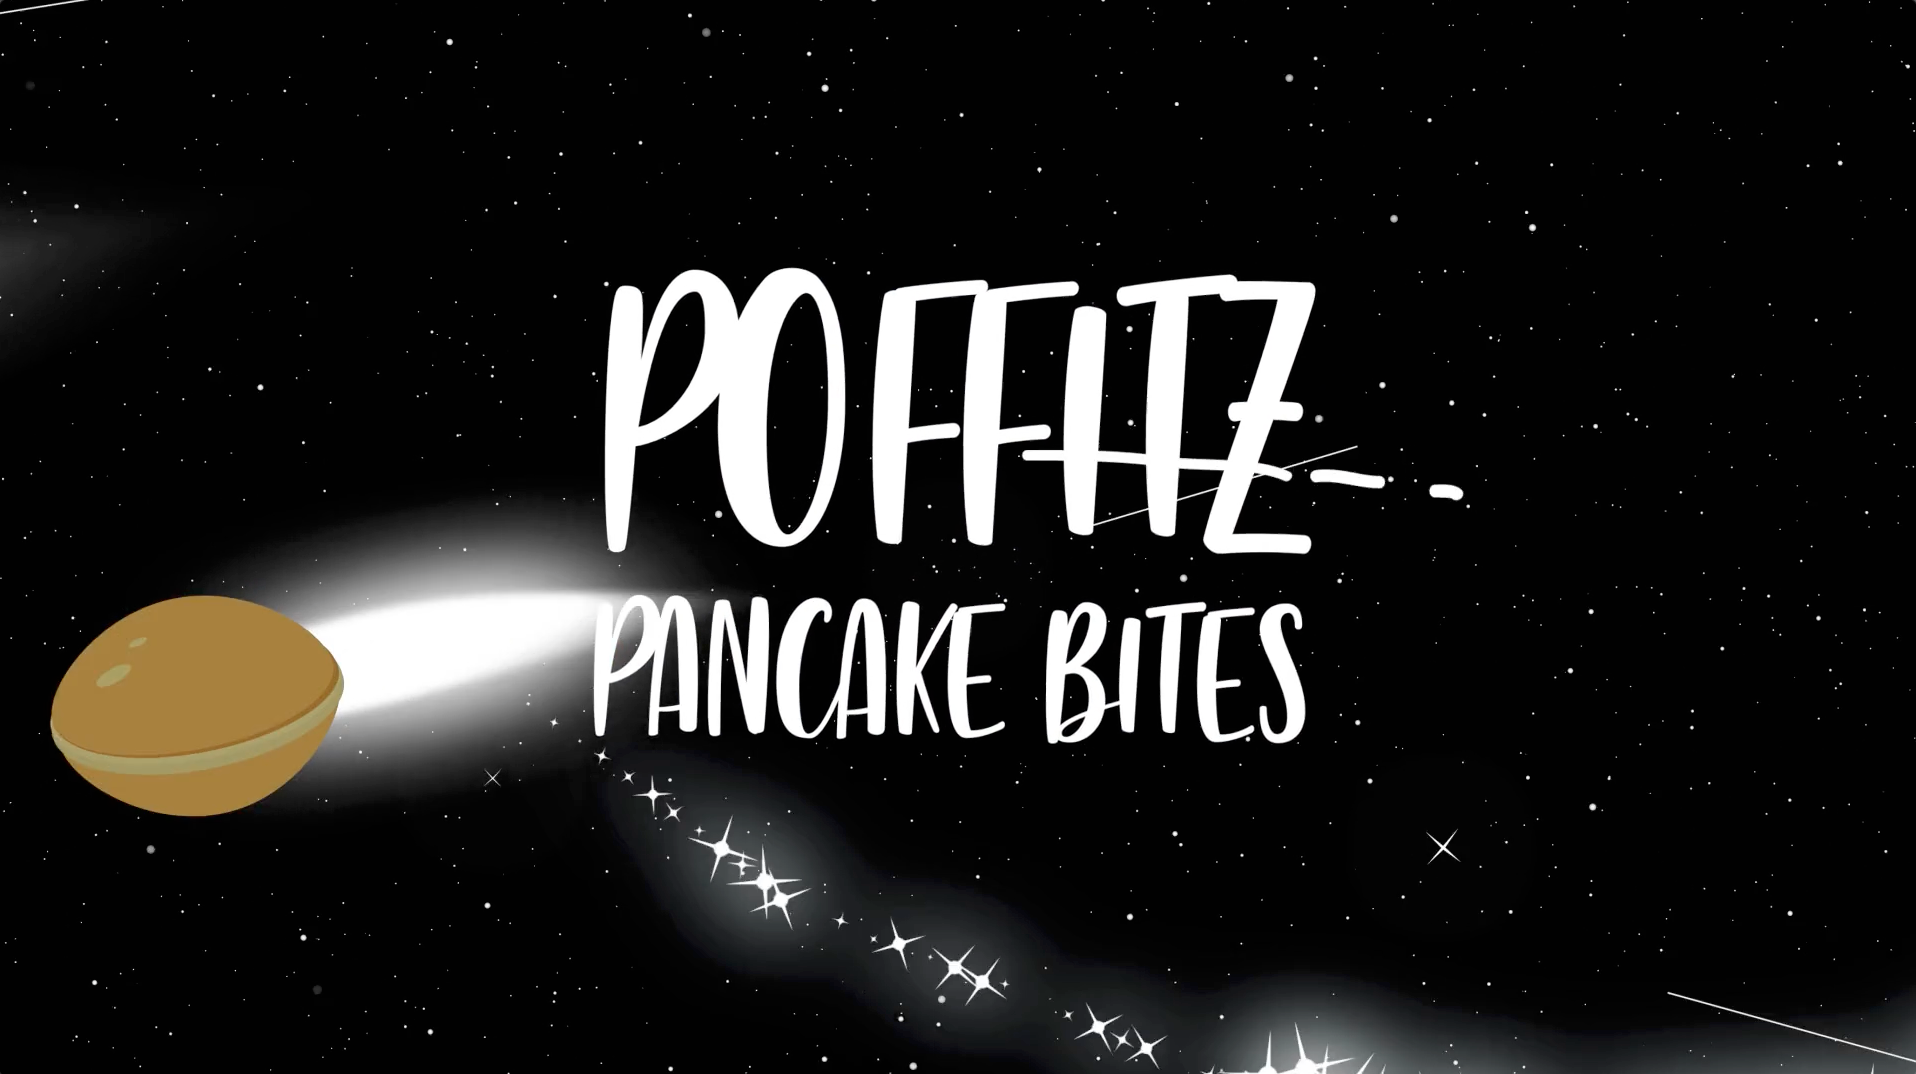 Poffitz Mini Pancake Bites Are Out of This WORLD!